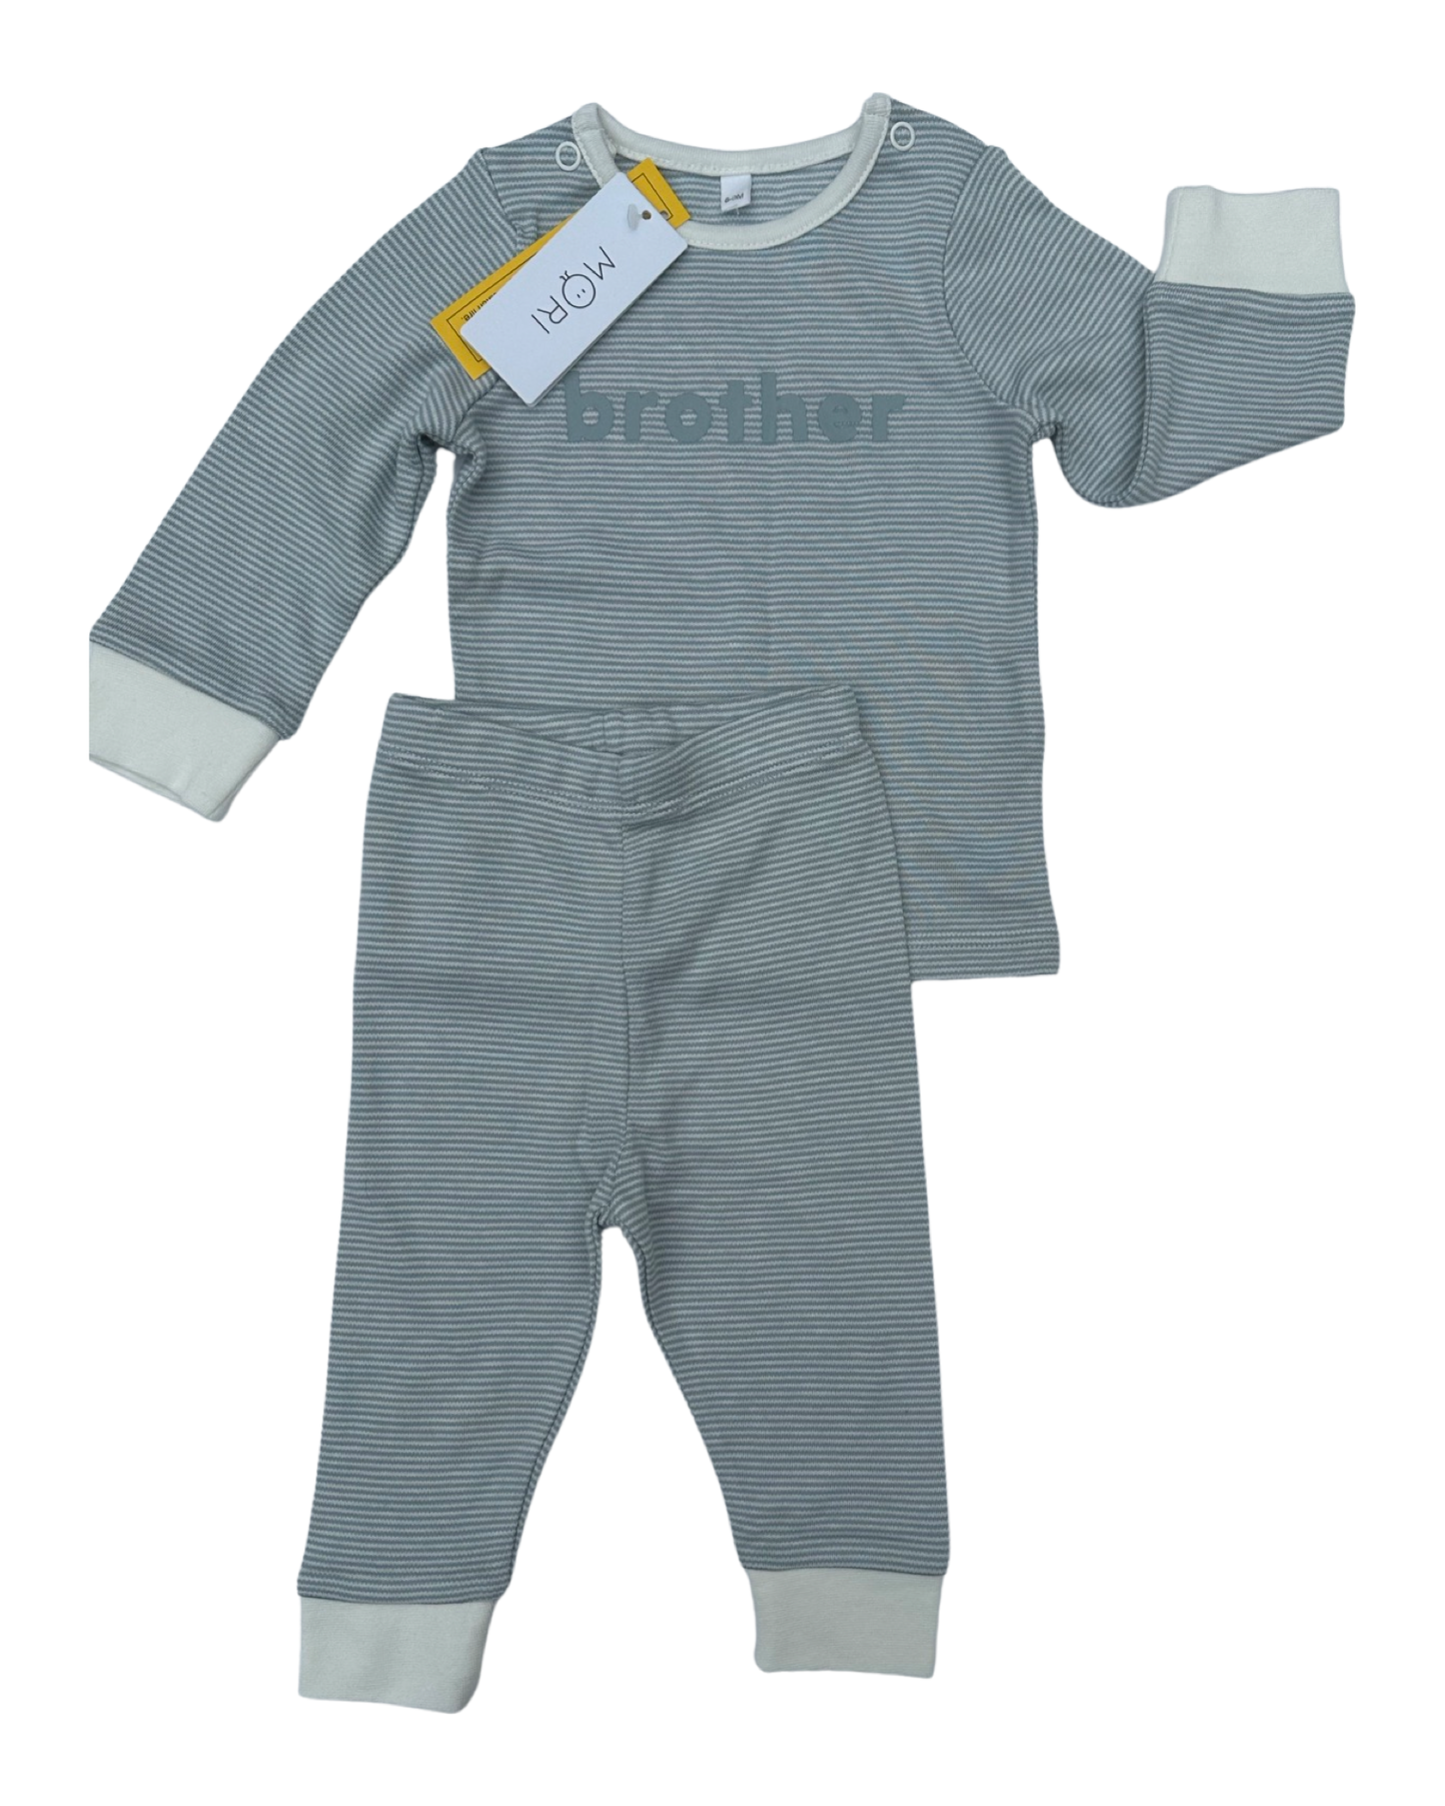 Mori 'Brother' slogan pyjamas (size 6-9mths)